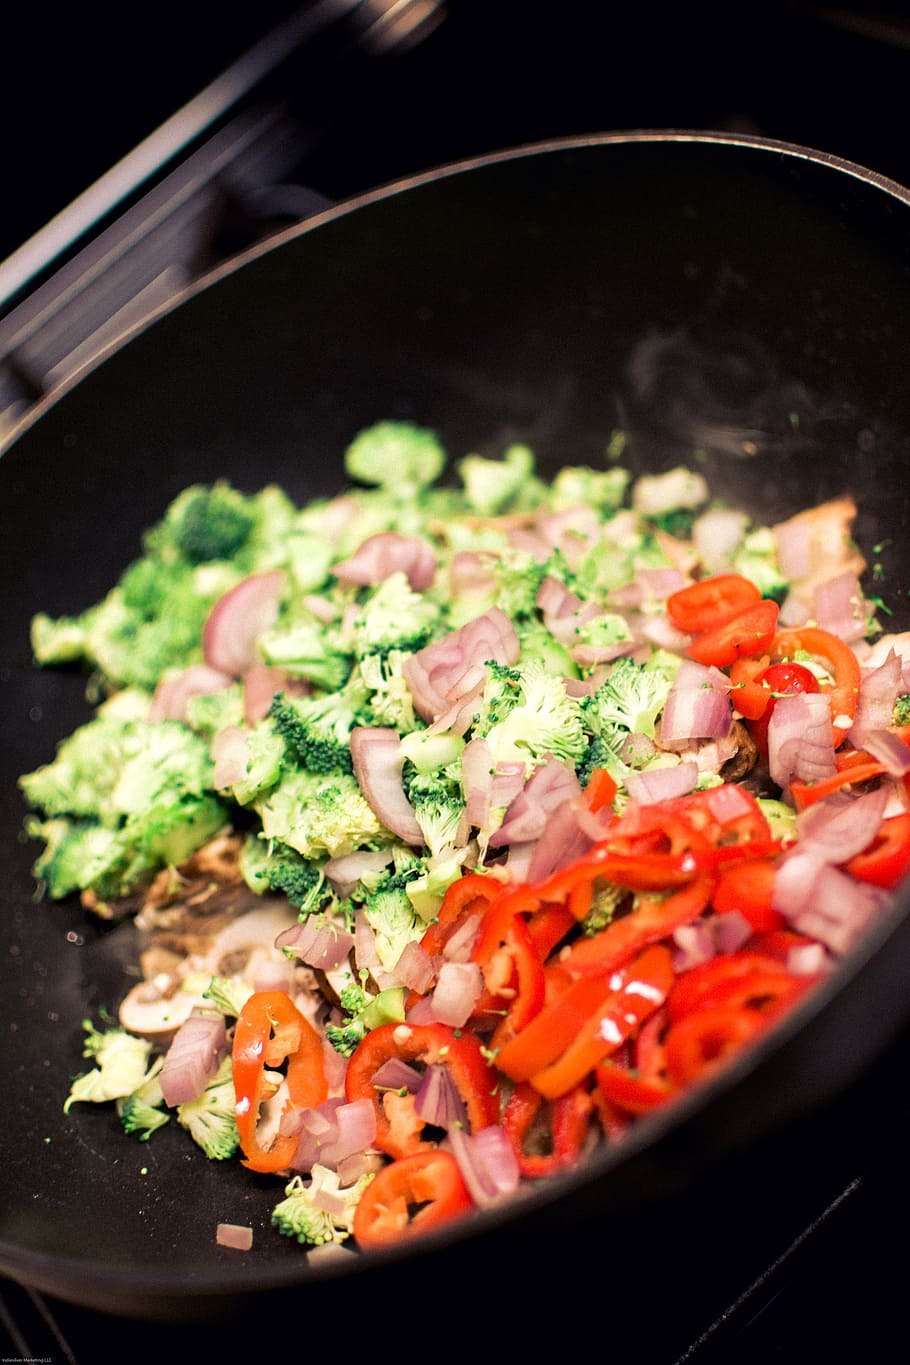 cooking, vegetables, stove, food, dinner, cook, fresh vegetables, eating healthy, vegetable, wok